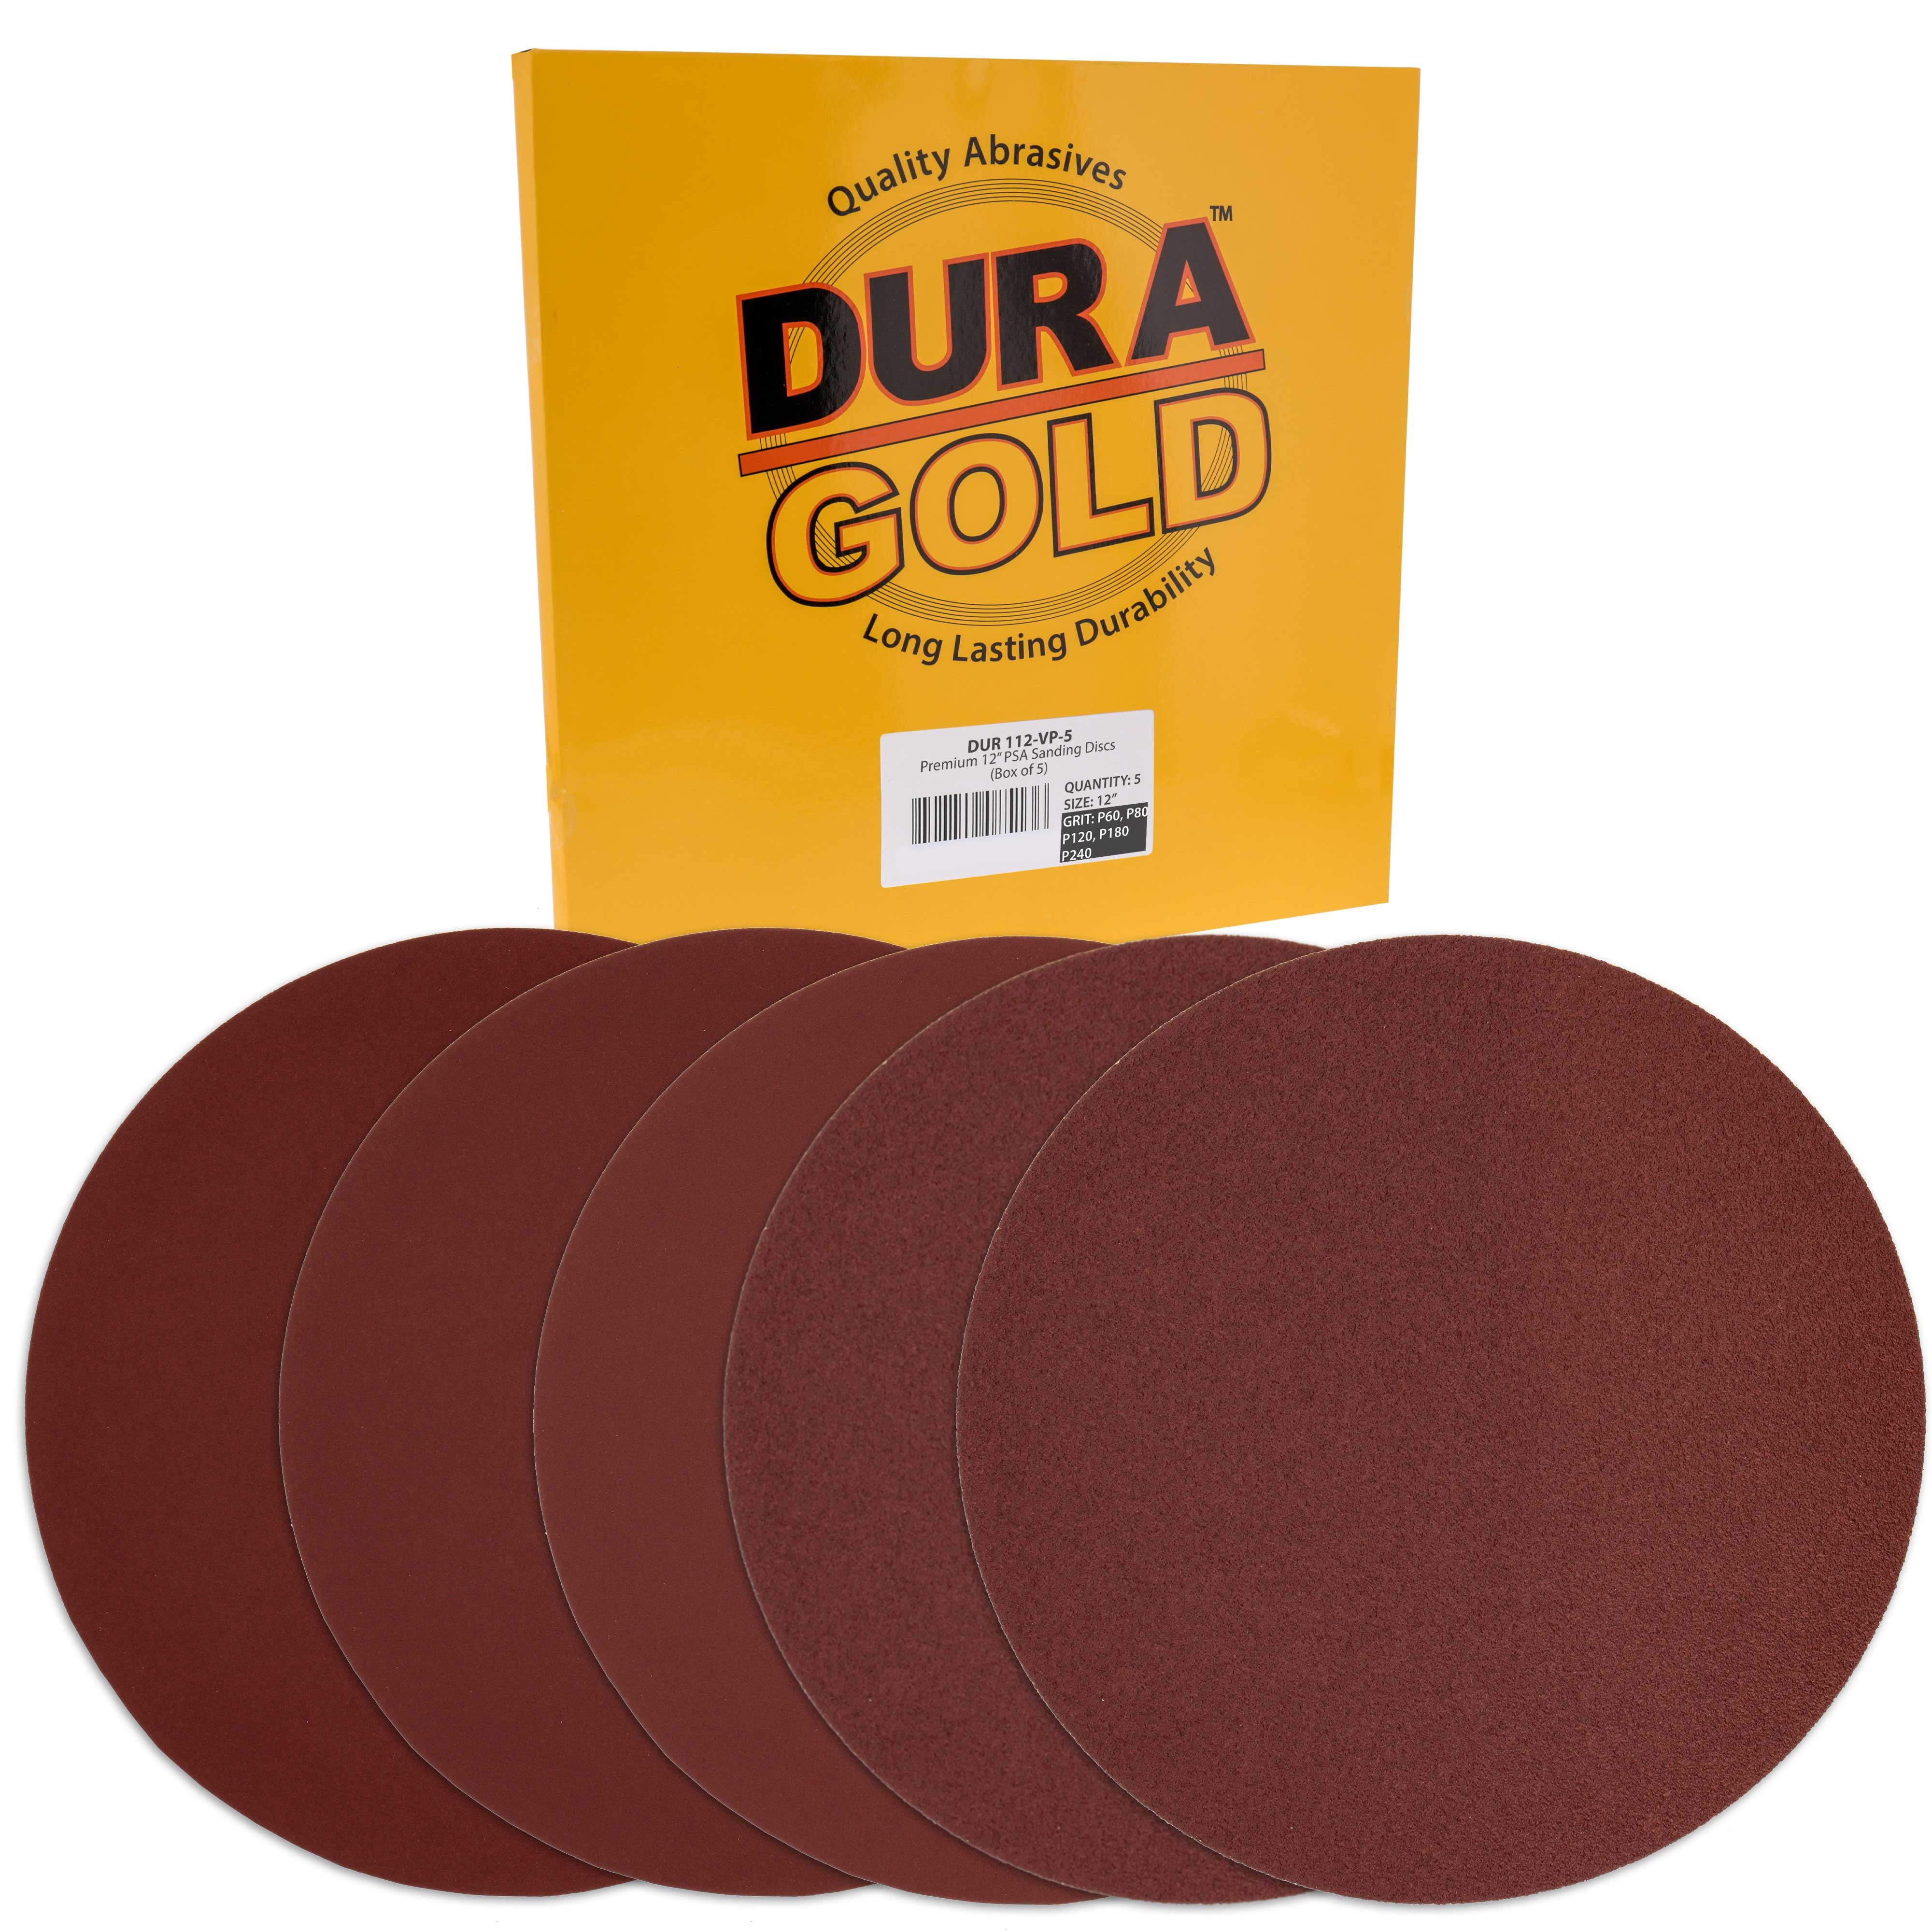 Premium Gold 6" PSA Sanding Discs Roll VARIETY Pack 600 discs 